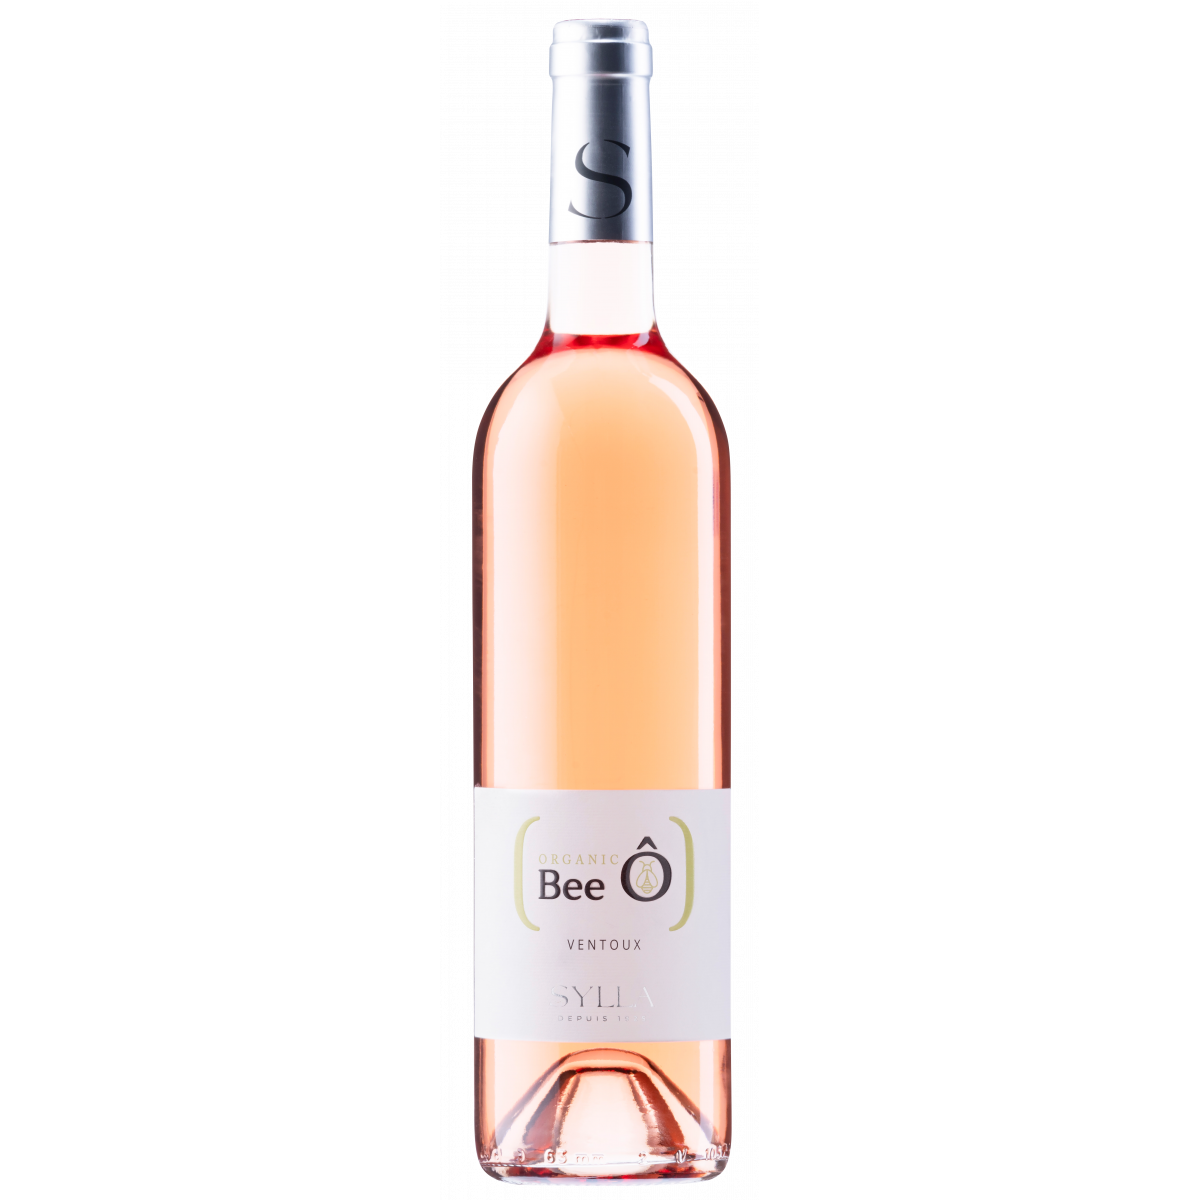 Vin rosé AOP Luberon Cave coopérative Apt Sylla Terroirs d'altitude